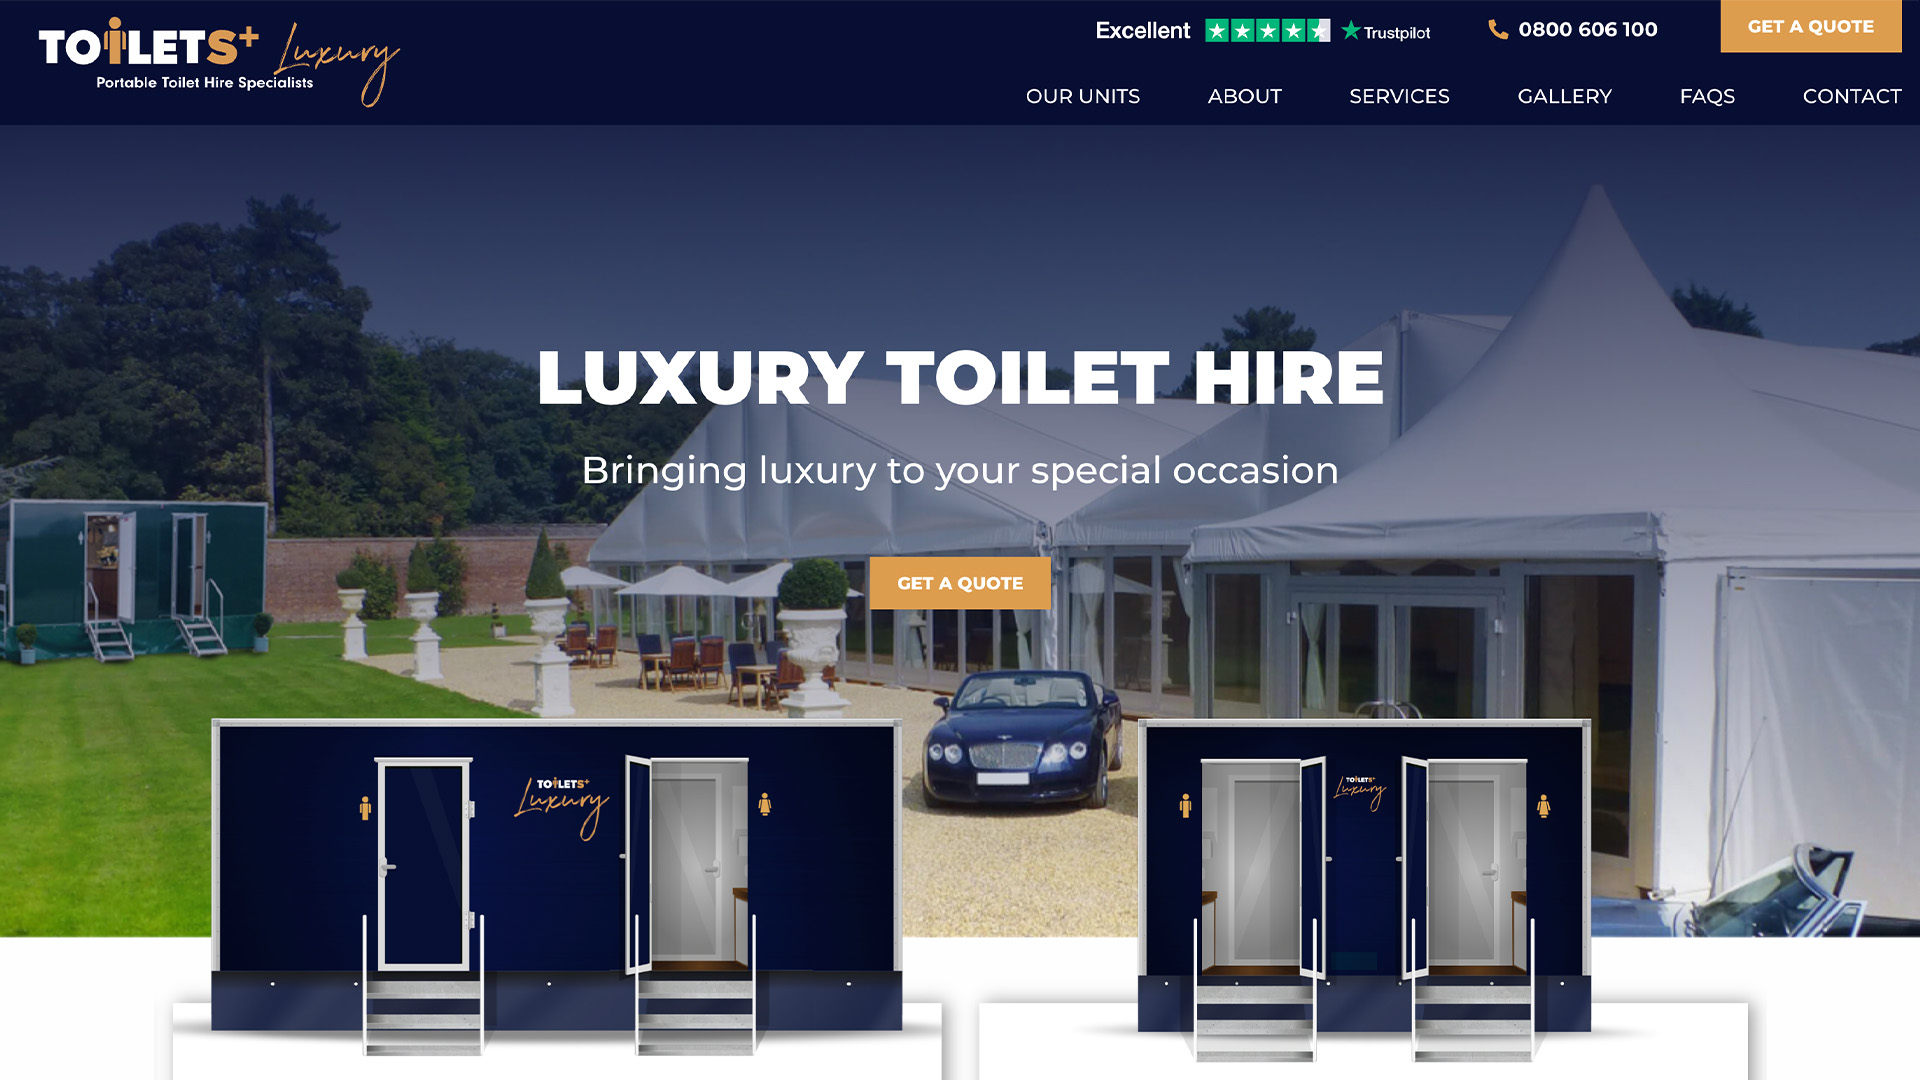 Toilets+ luxury toilet hire